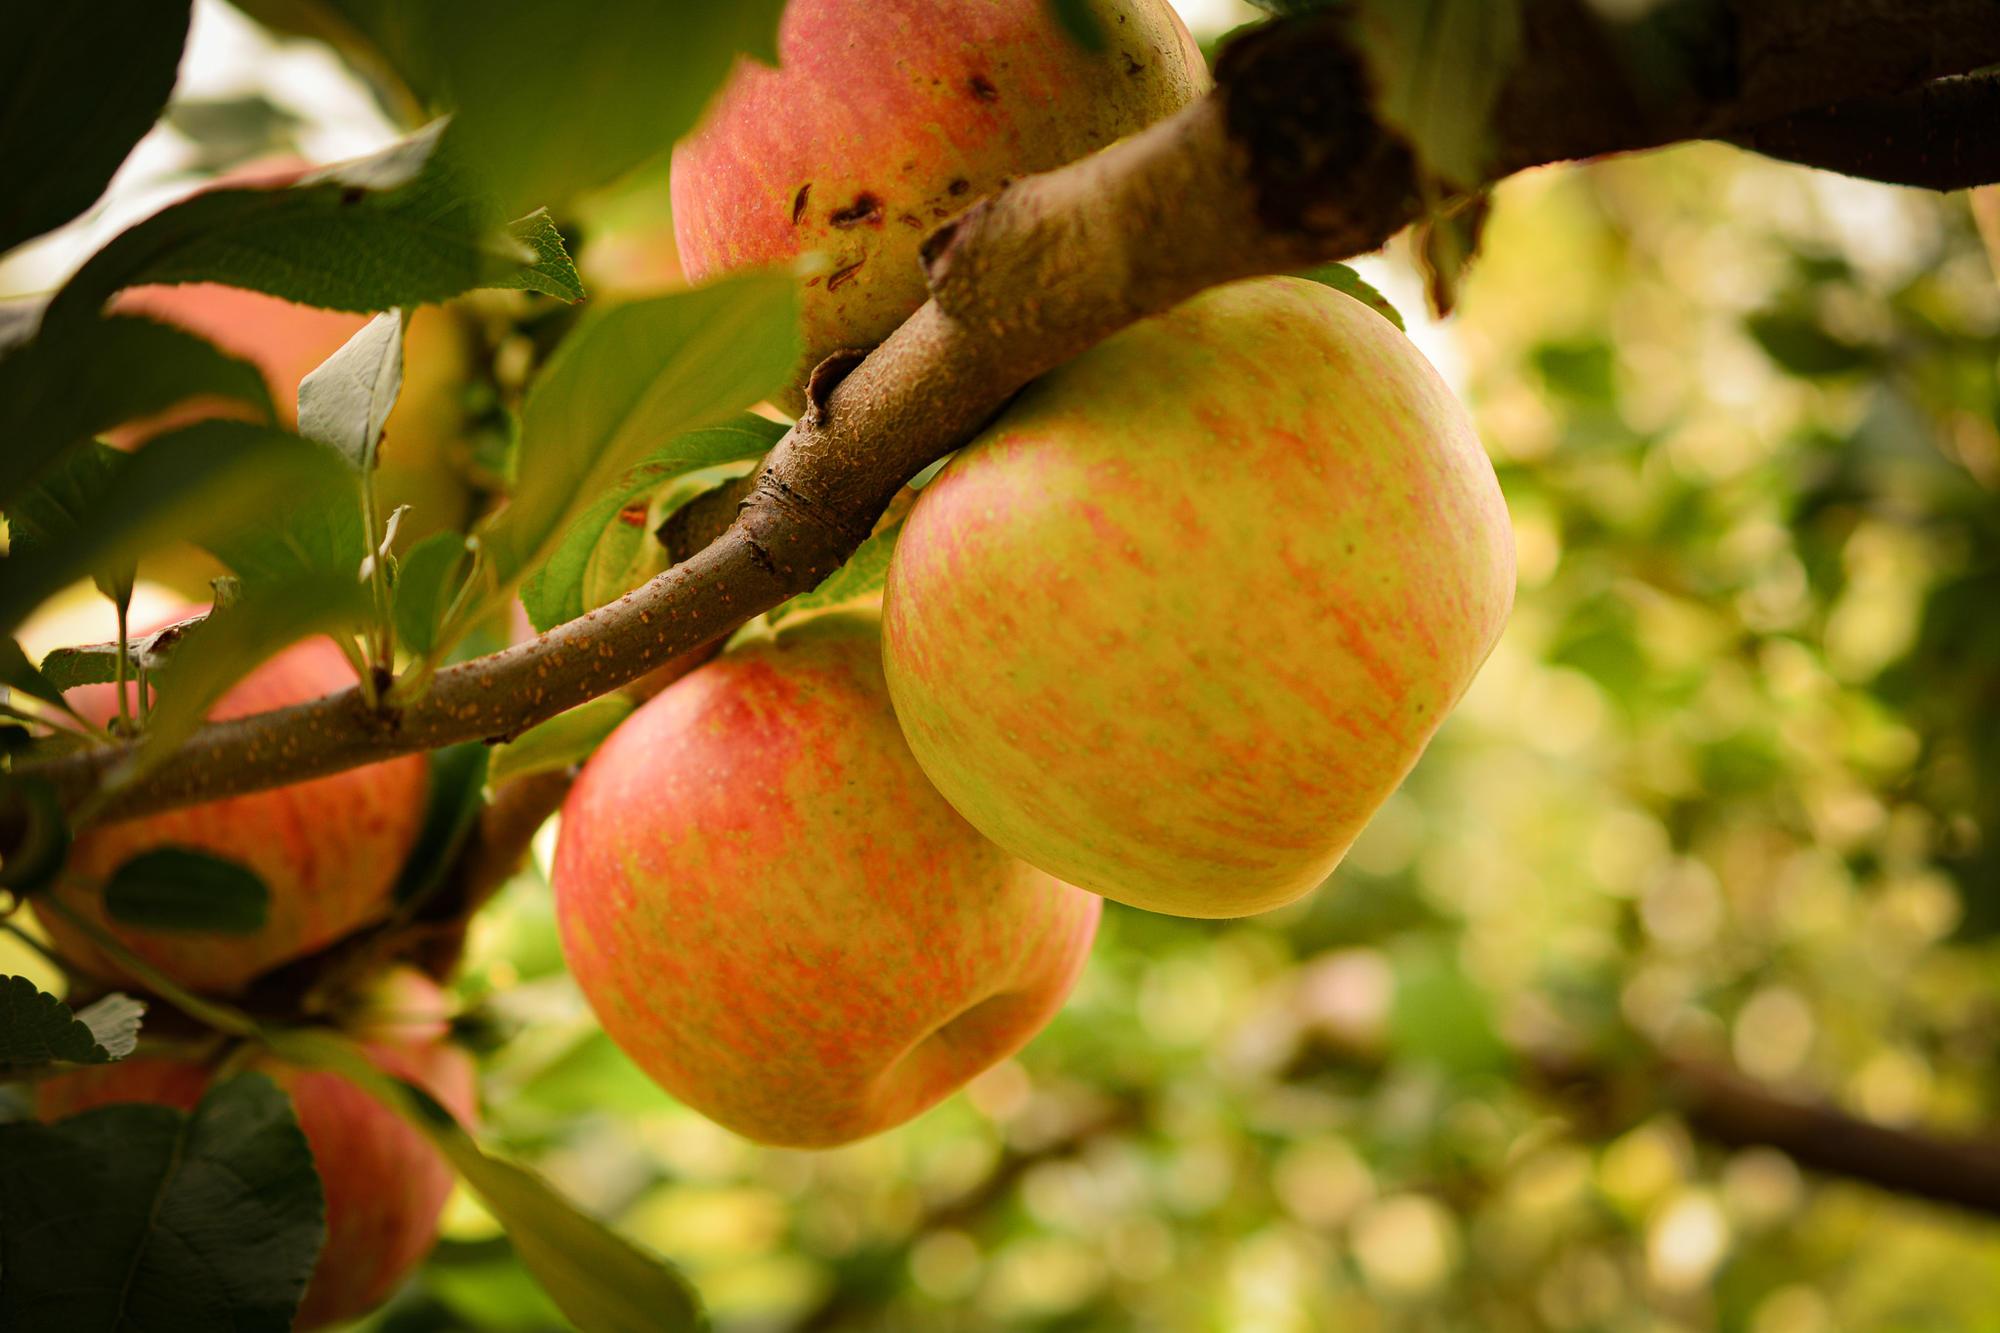 Organic Fuji Apple, Apples and Pears